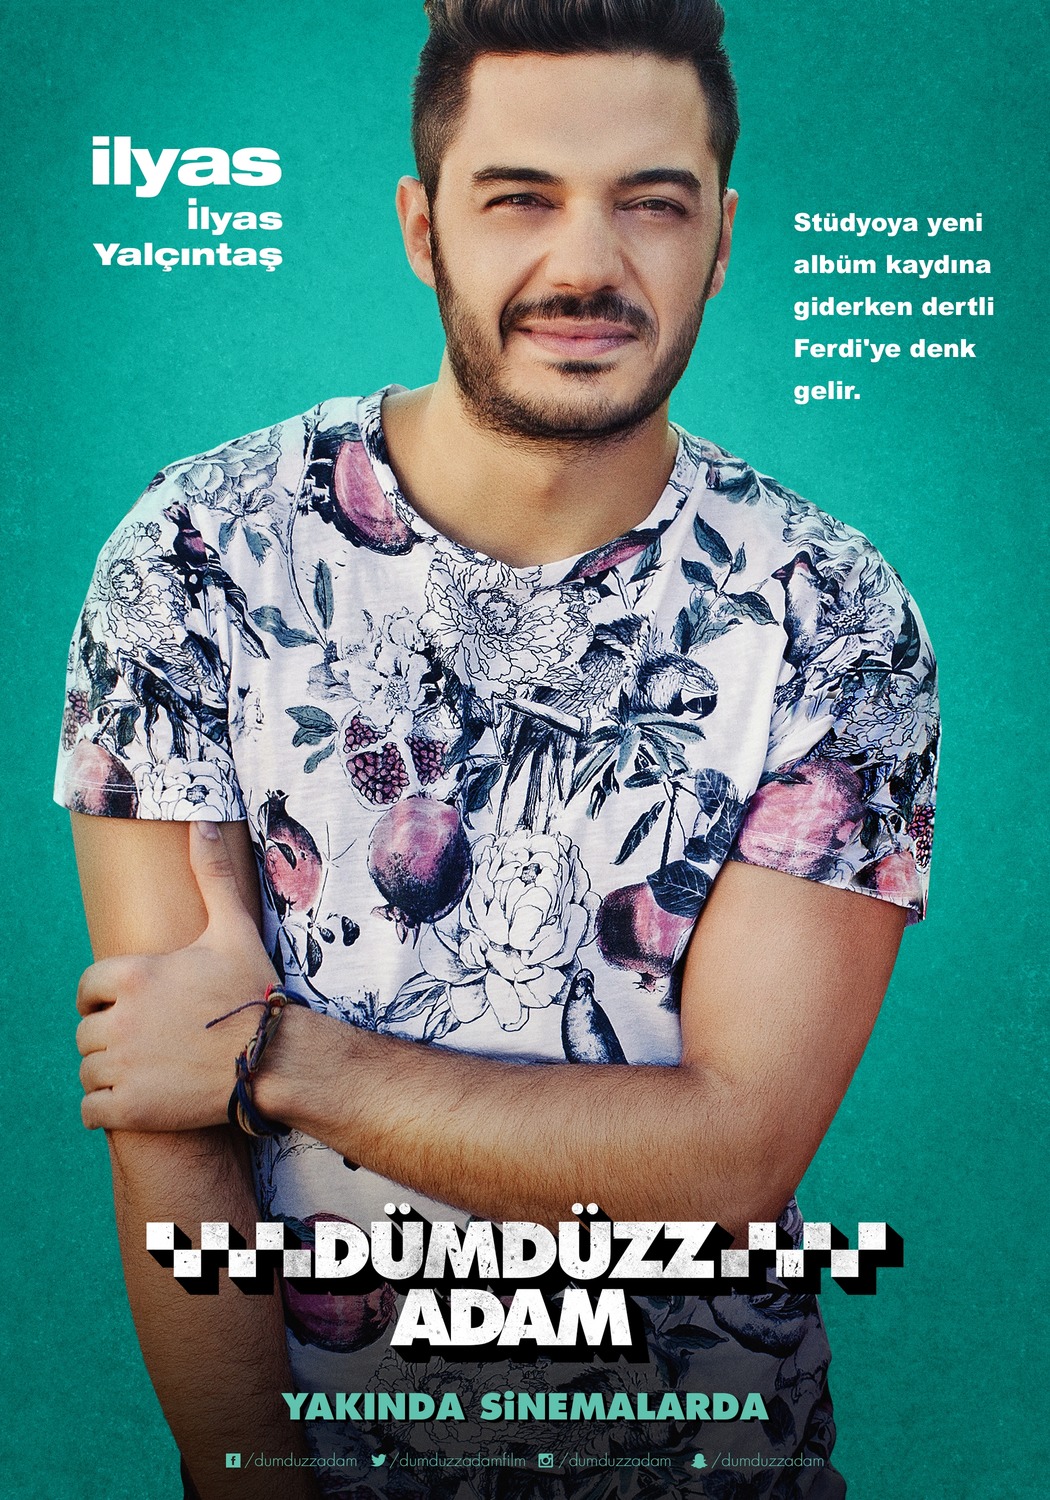 Extra Large Movie Poster Image for Dümdüzz Adam (#14 of 16)